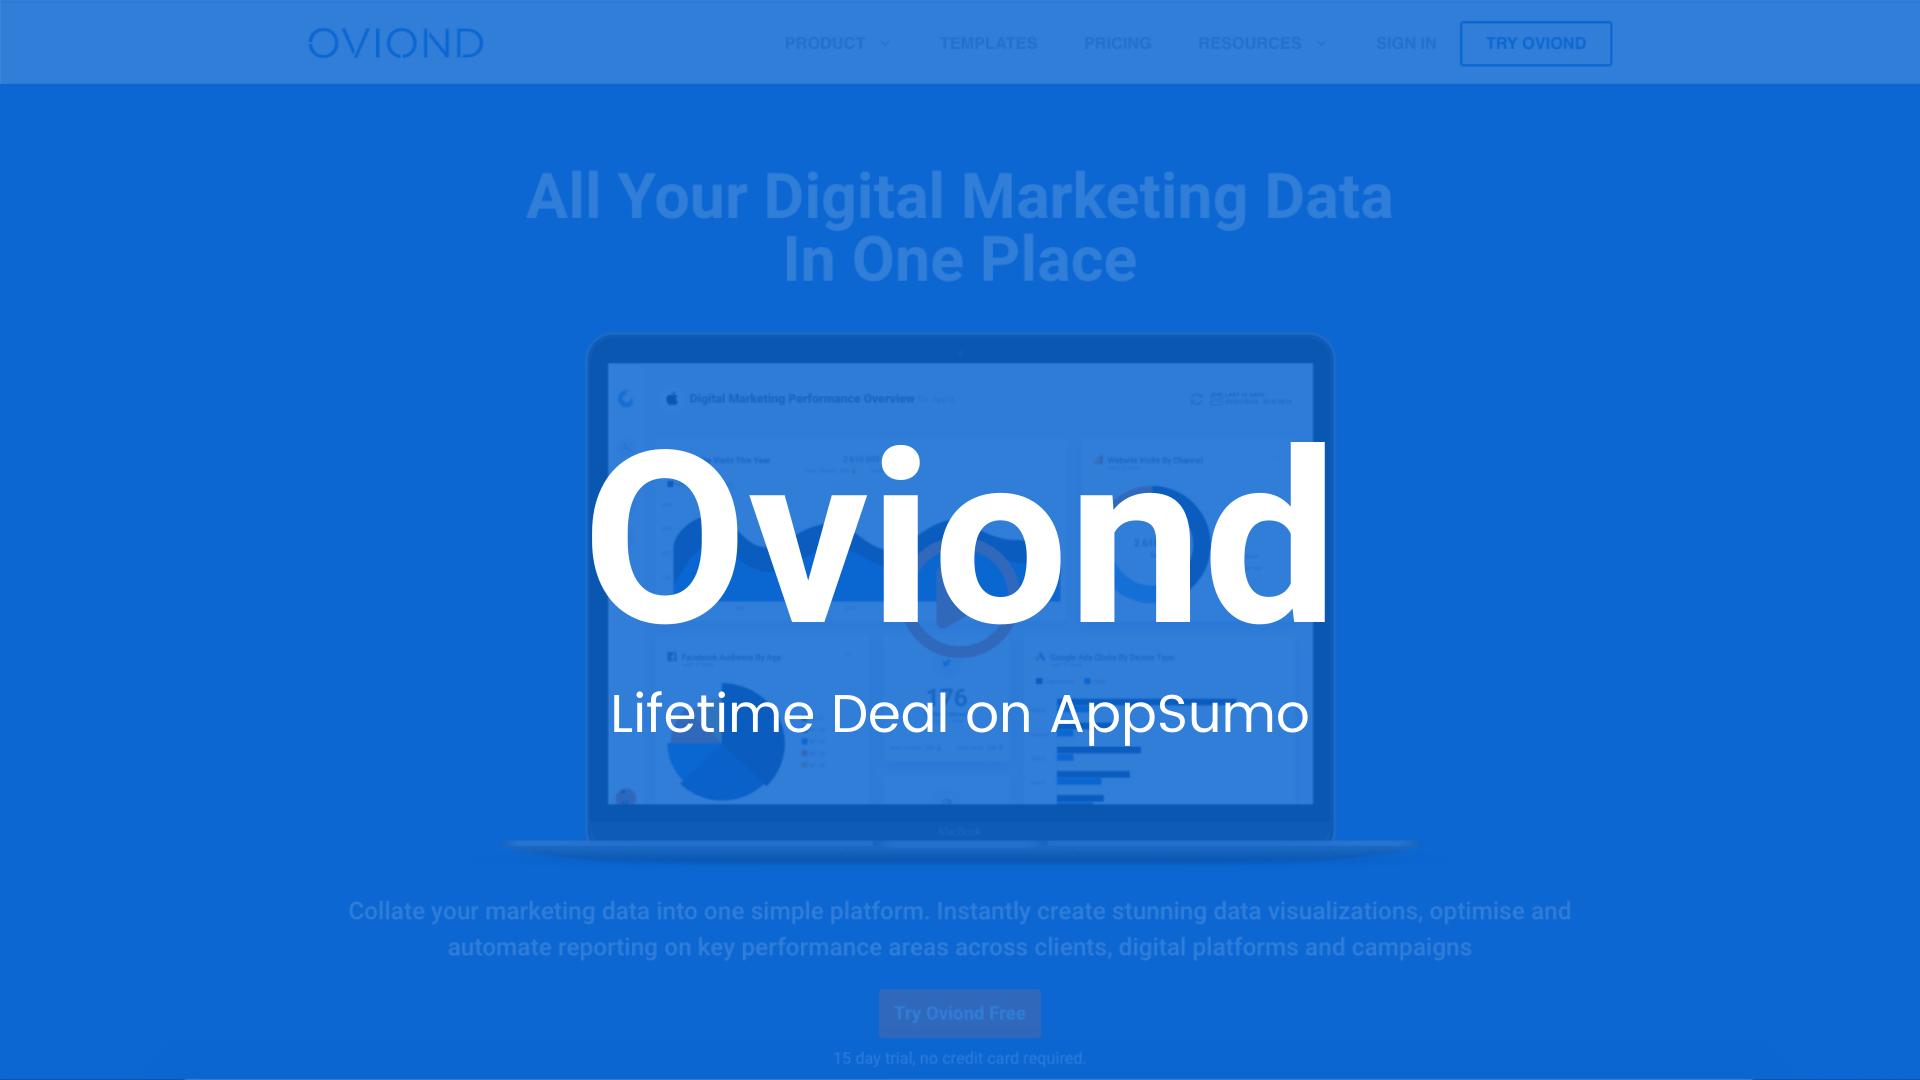 Oviond: Centralized Digital Marketing Data